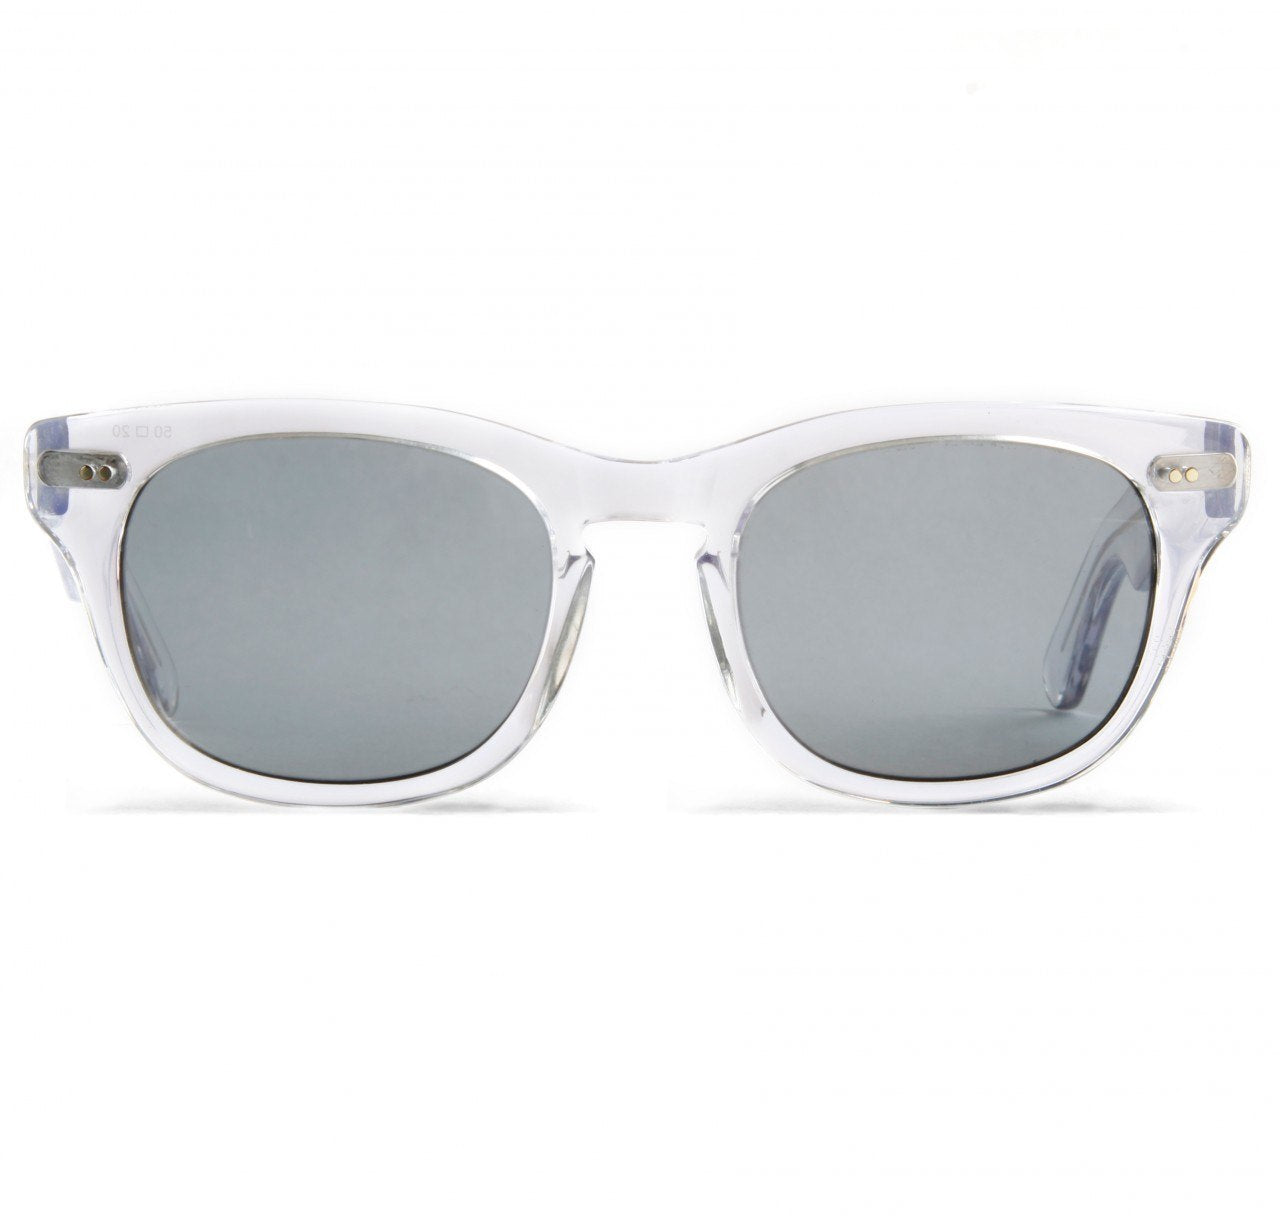 Shuron Sidewinder Crystal Sunglasses